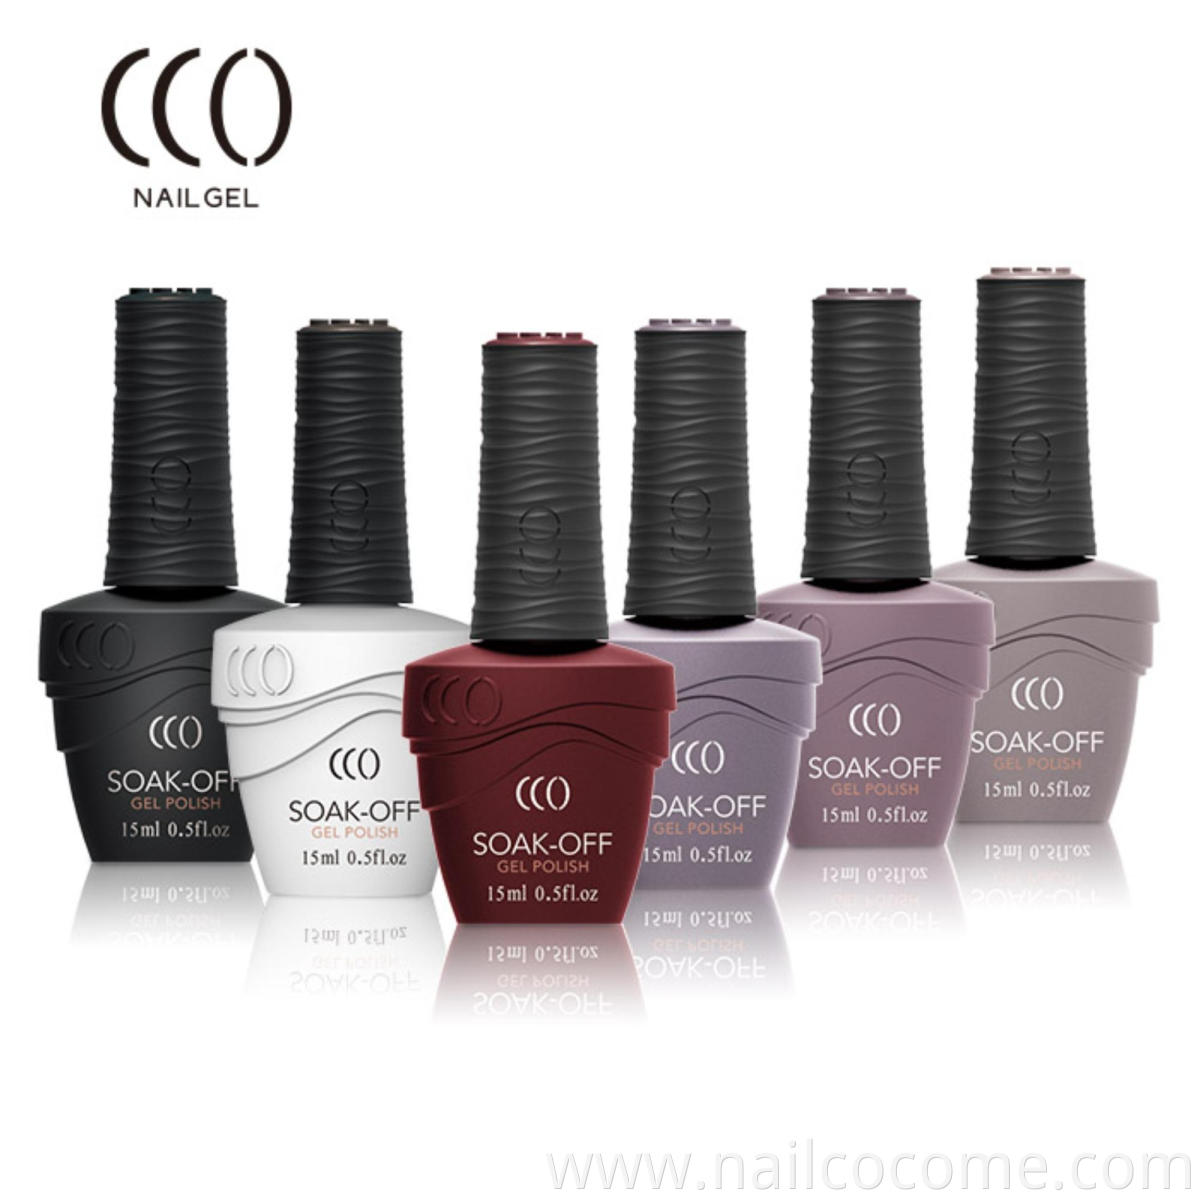 CCO Global Fashion 120 Beauty Colors Soak Off Led Nail Polish Uv Gel